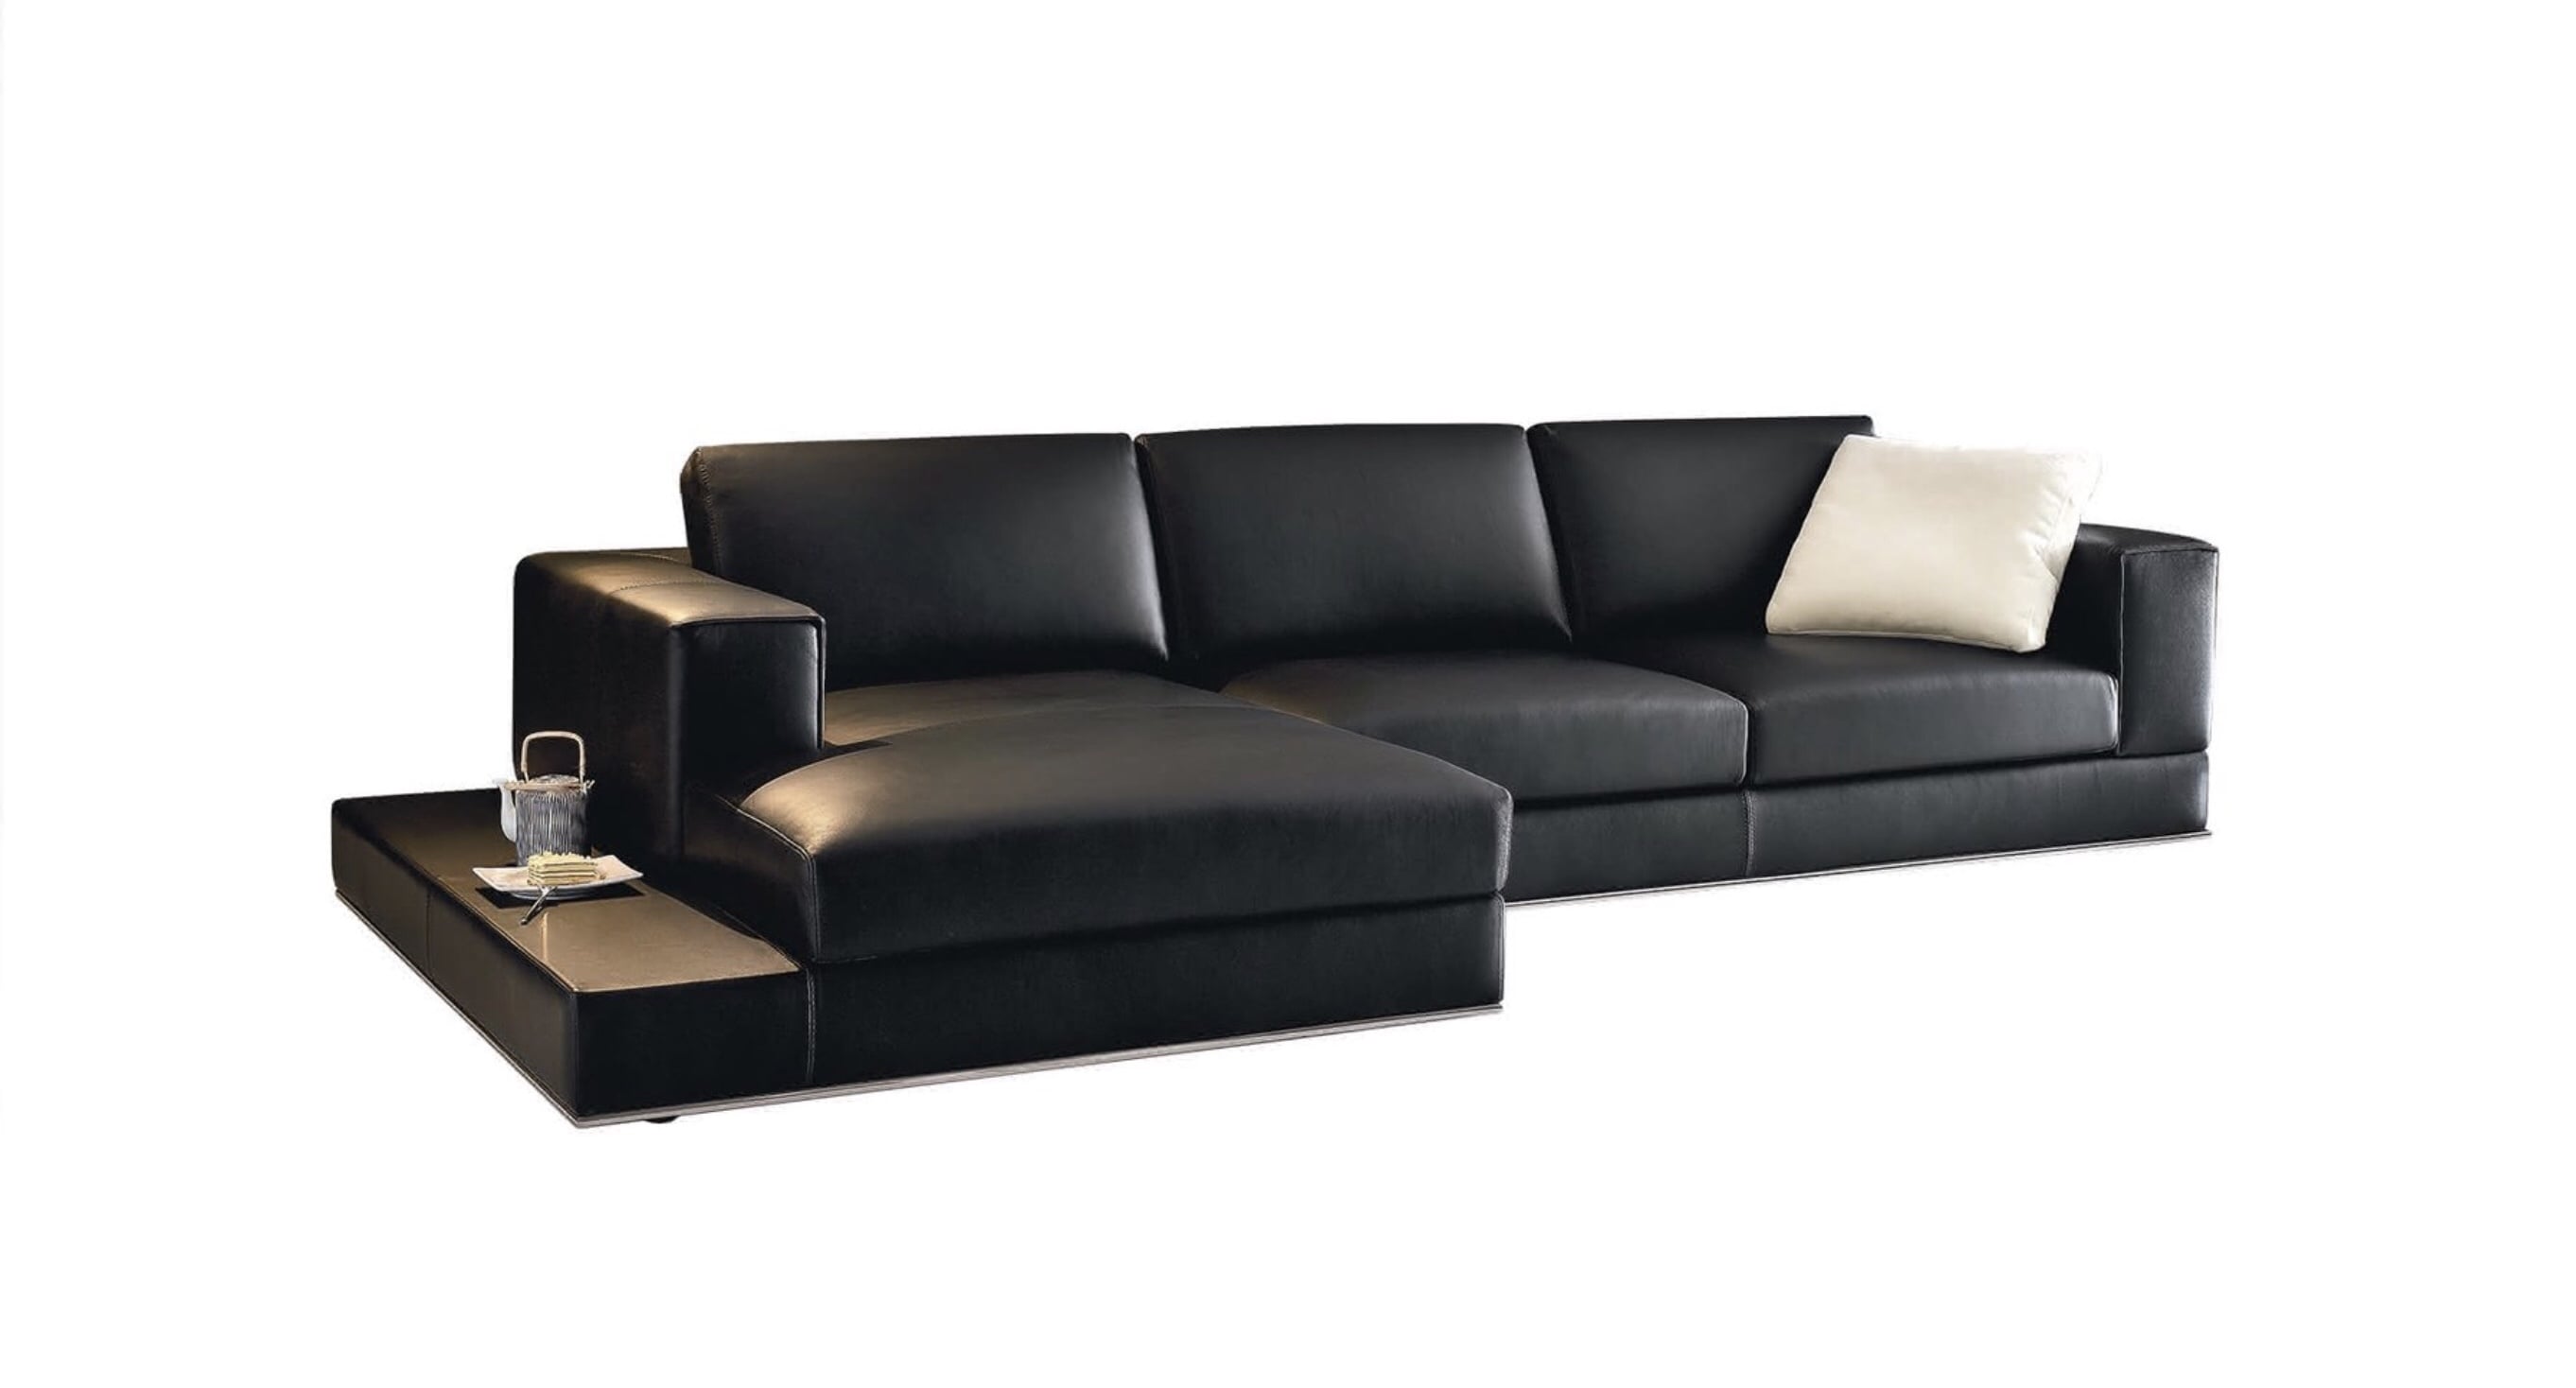 Made to Order Furniture. - Sofa 006-01